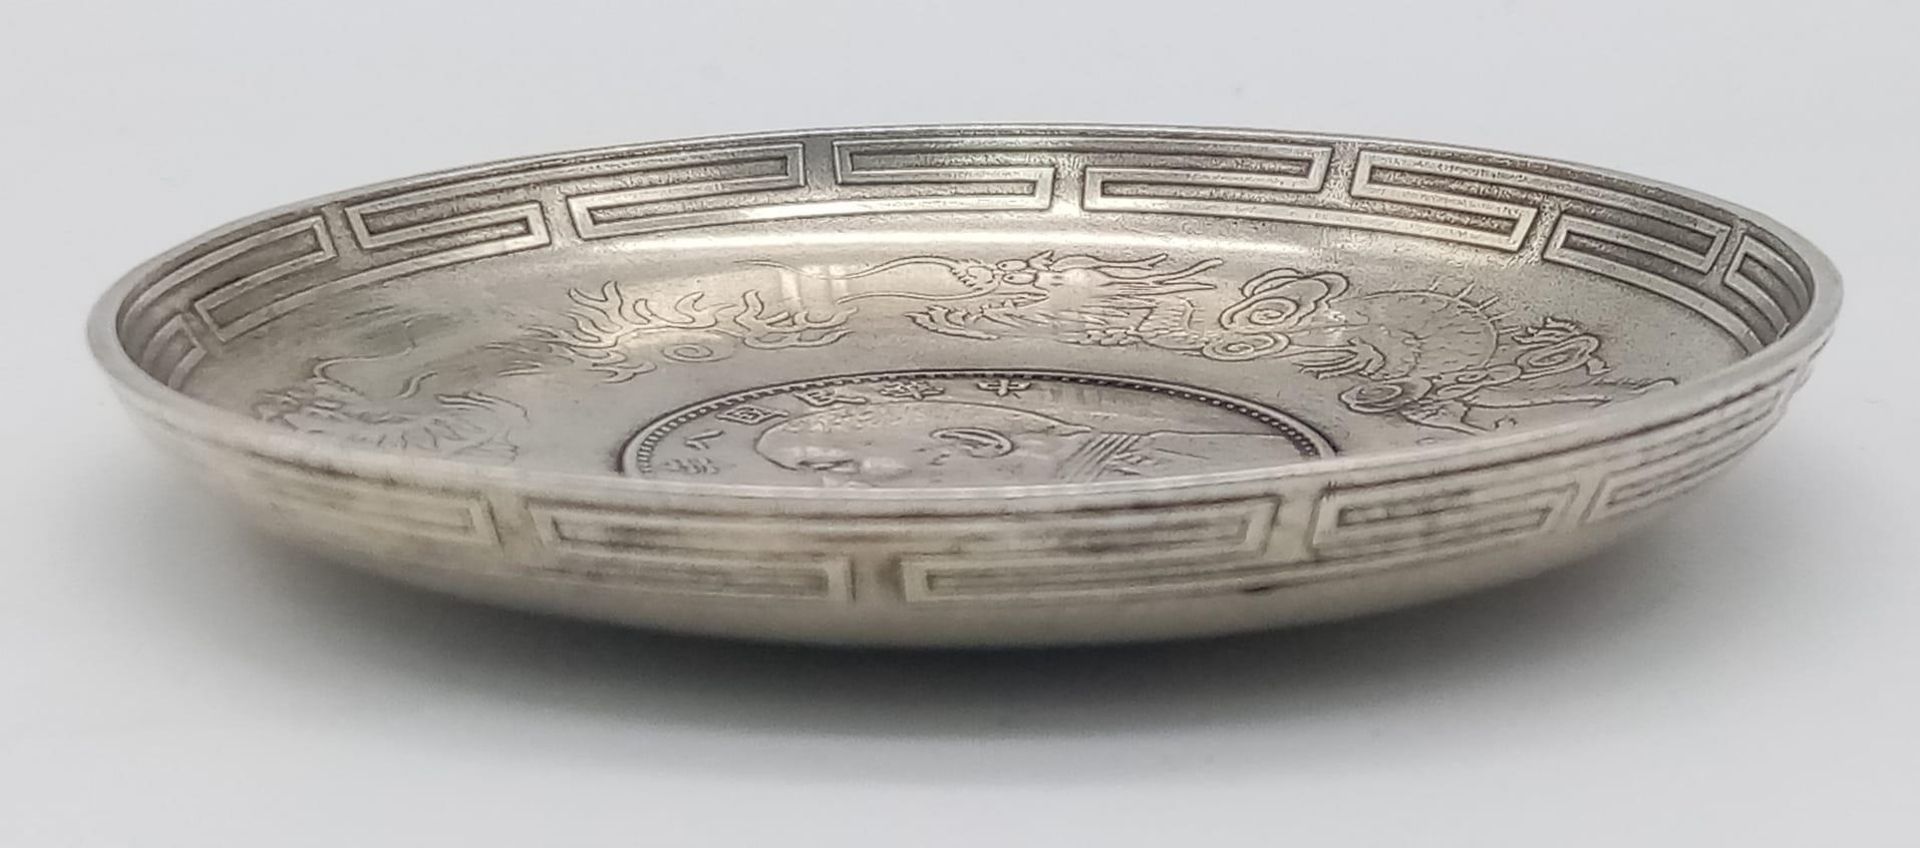 An Antique Chinese Silver, Yuan Coin Set, Dragon & Bat Detail Dish. Circa 1914, it measures 9.3cm - Image 4 of 5